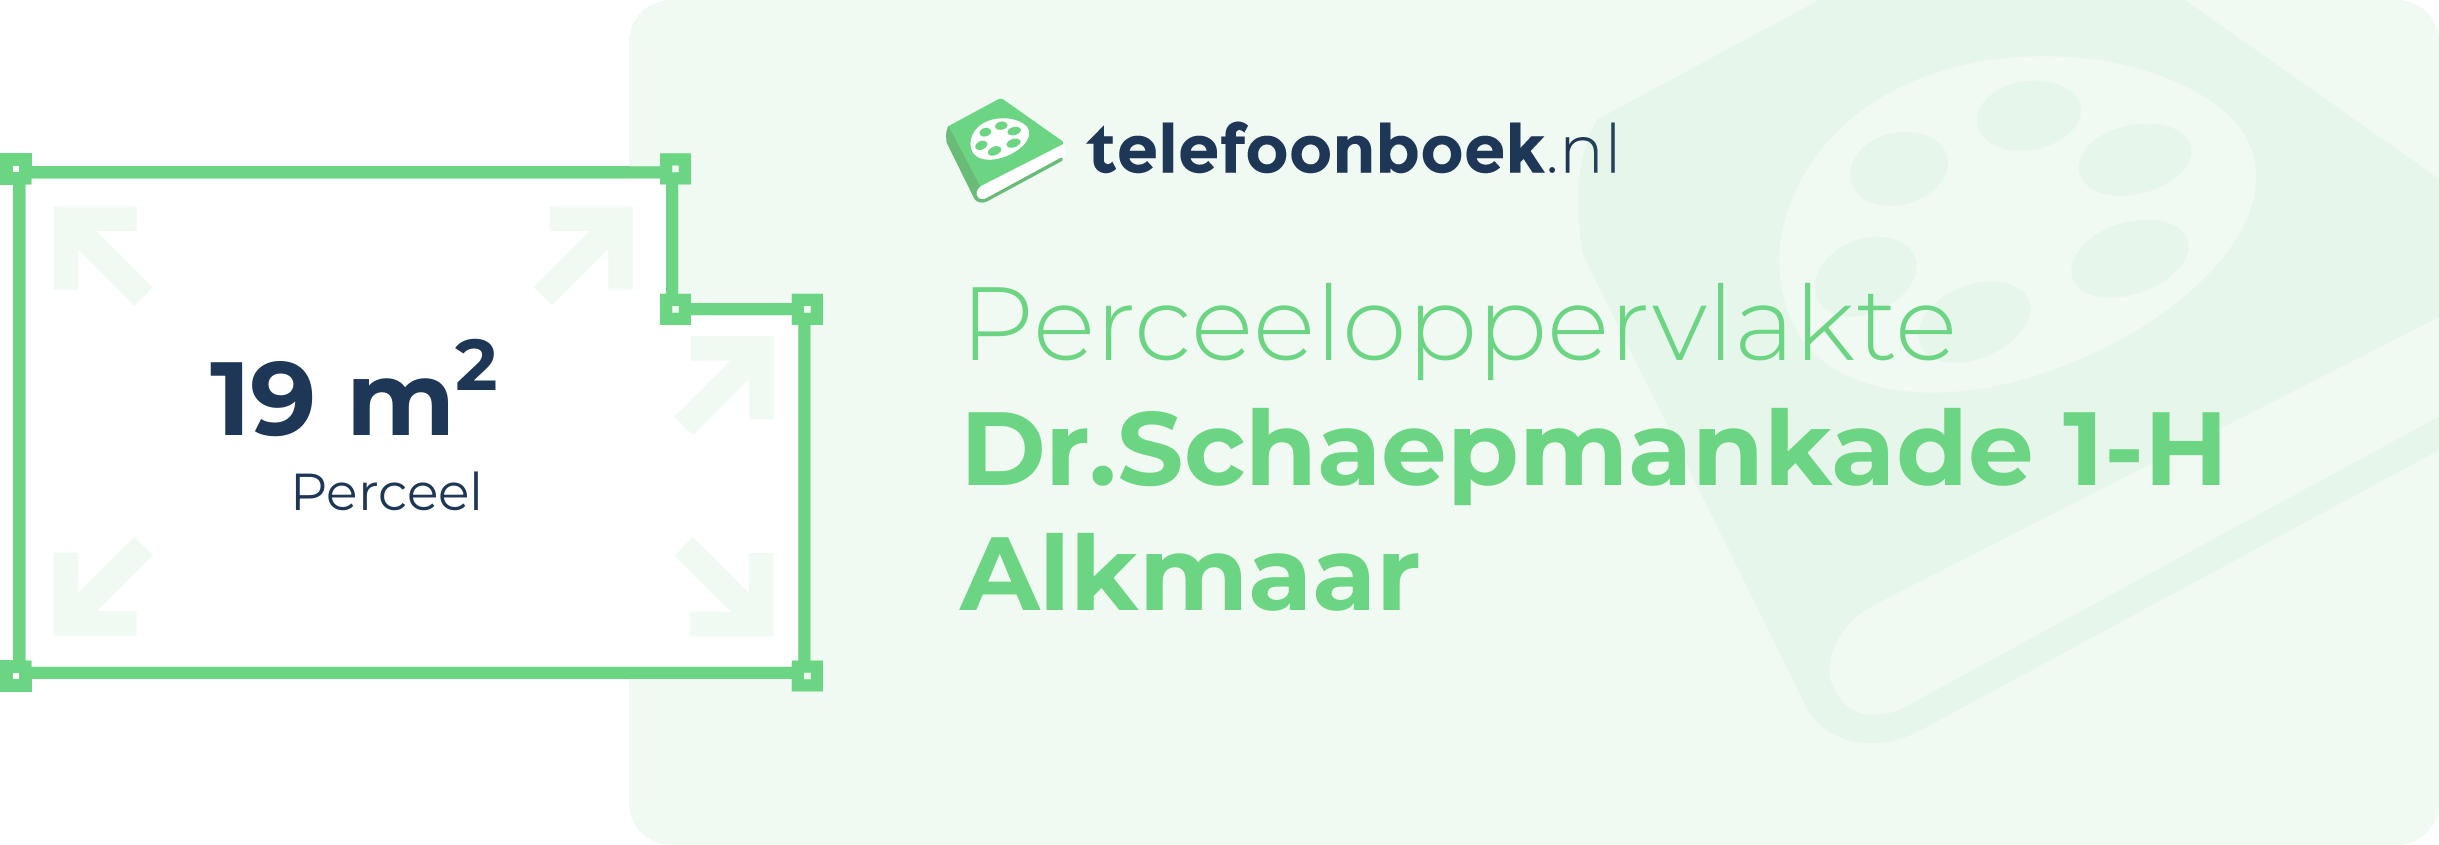 Perceeloppervlakte Dr.Schaepmankade 1-H Alkmaar